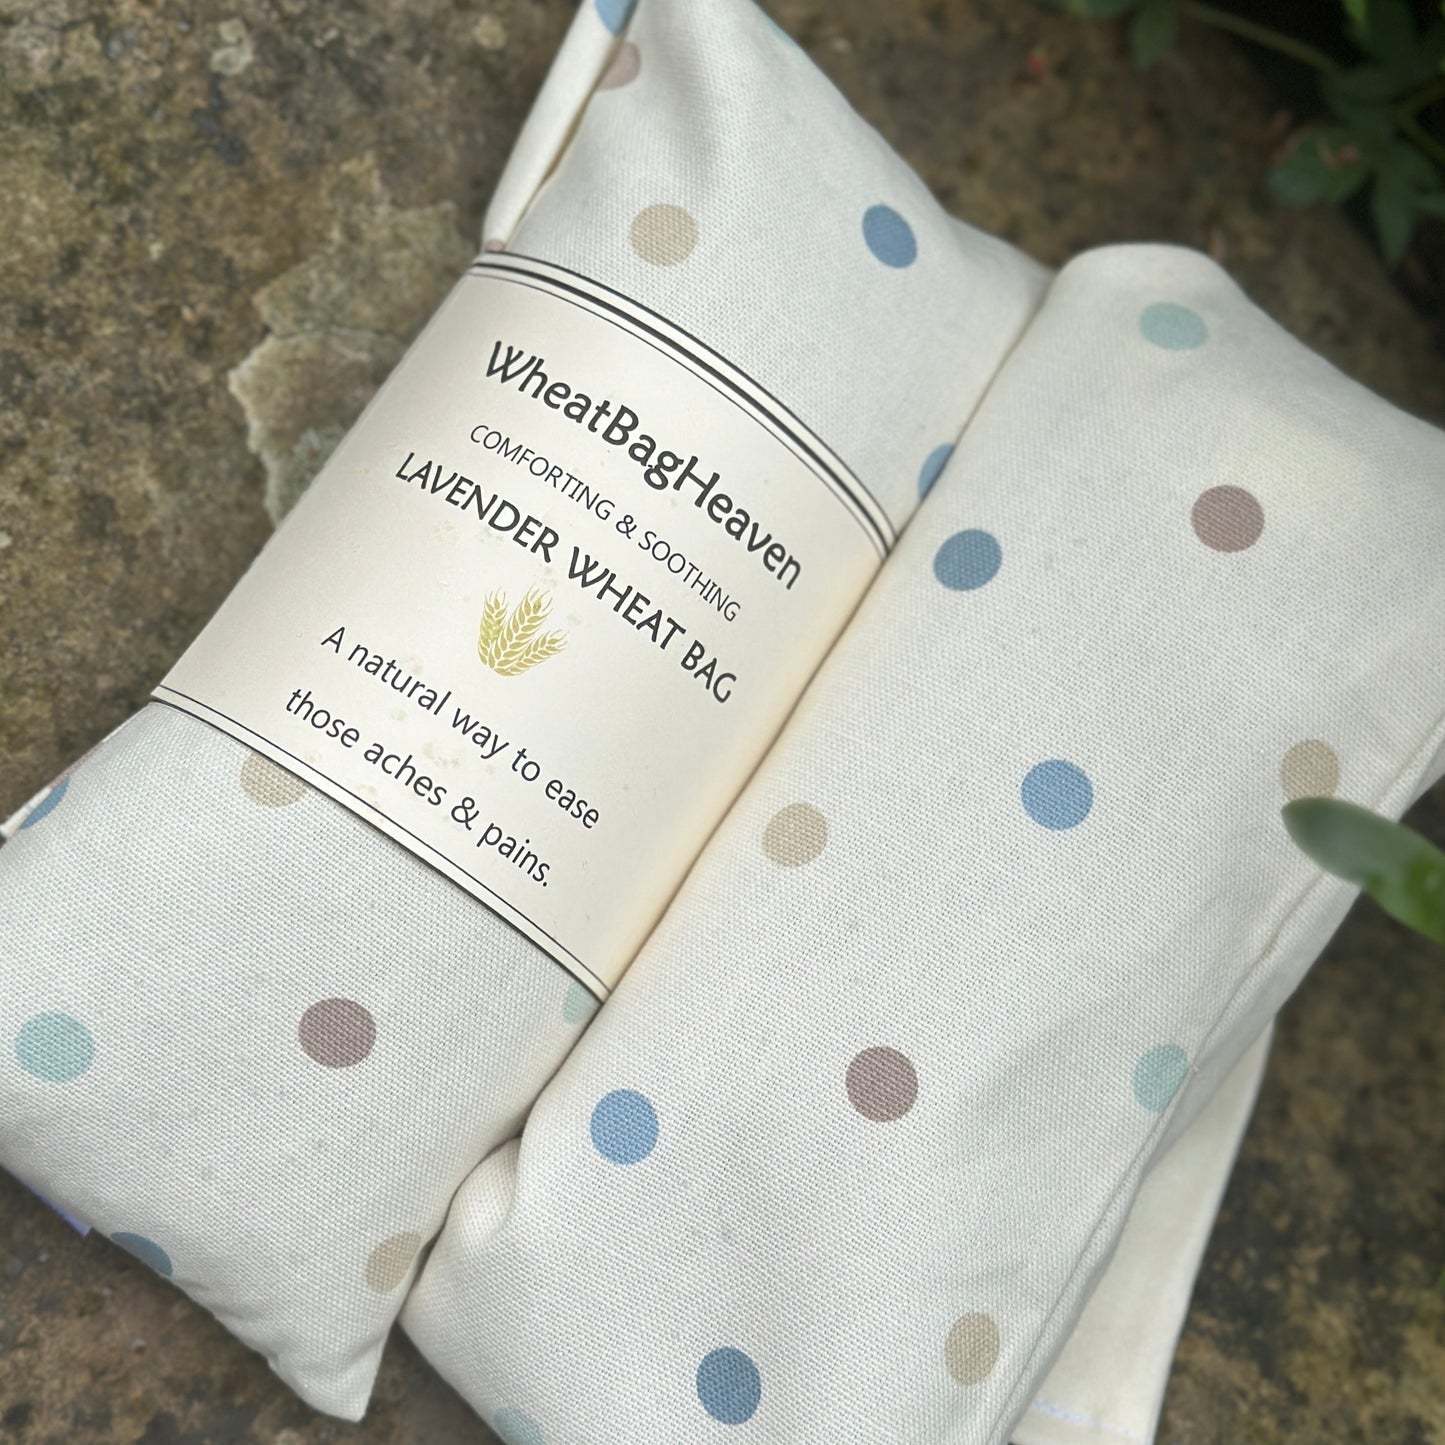 Long cotton wheat bag, lavender scented neck wrap. Hottie heat pad dotty print.